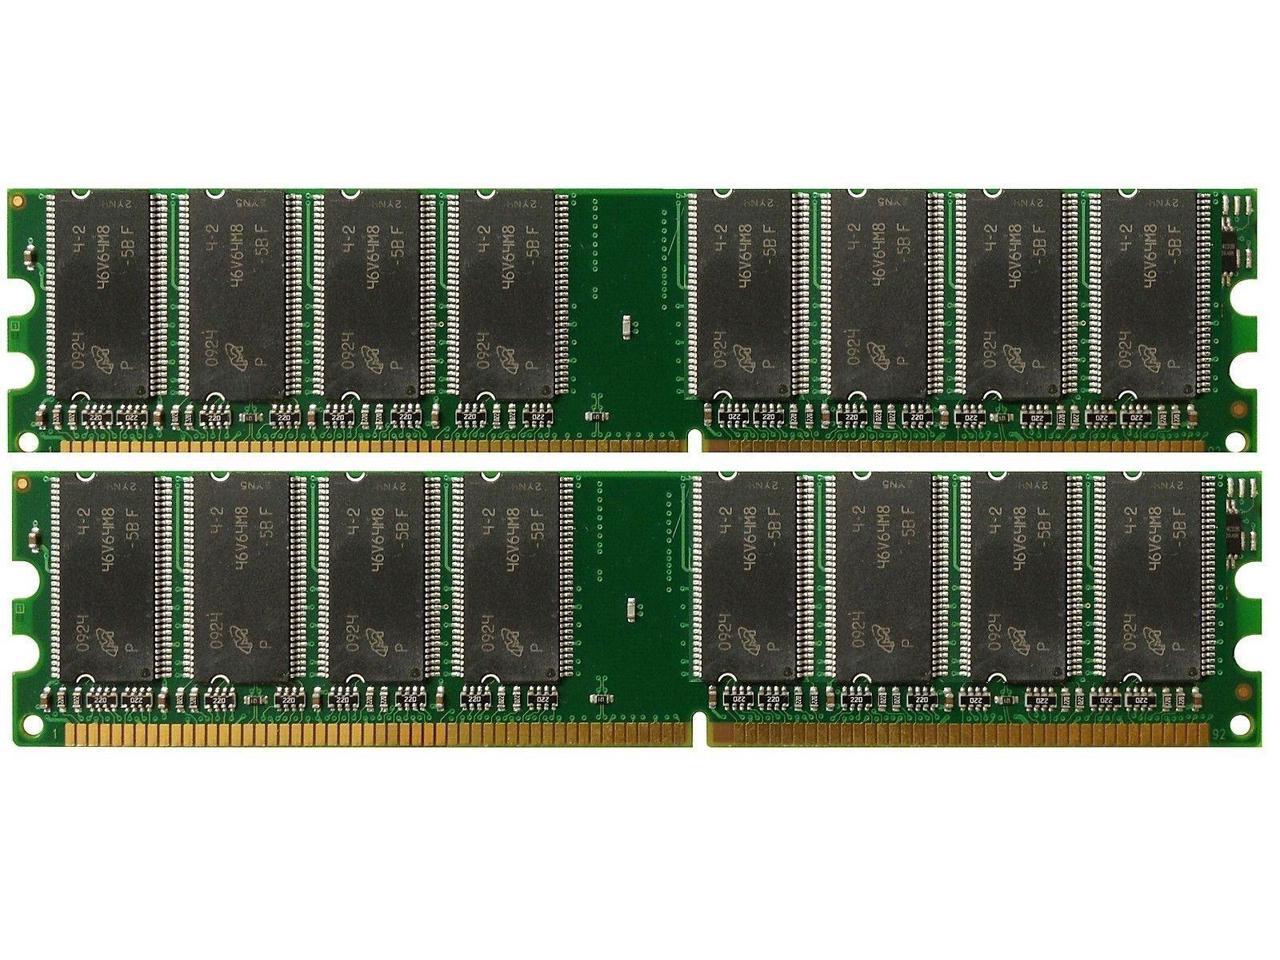 Ram 51. Ddr1 400 MHZ 4 GB Kit. Dell Dimension c521.